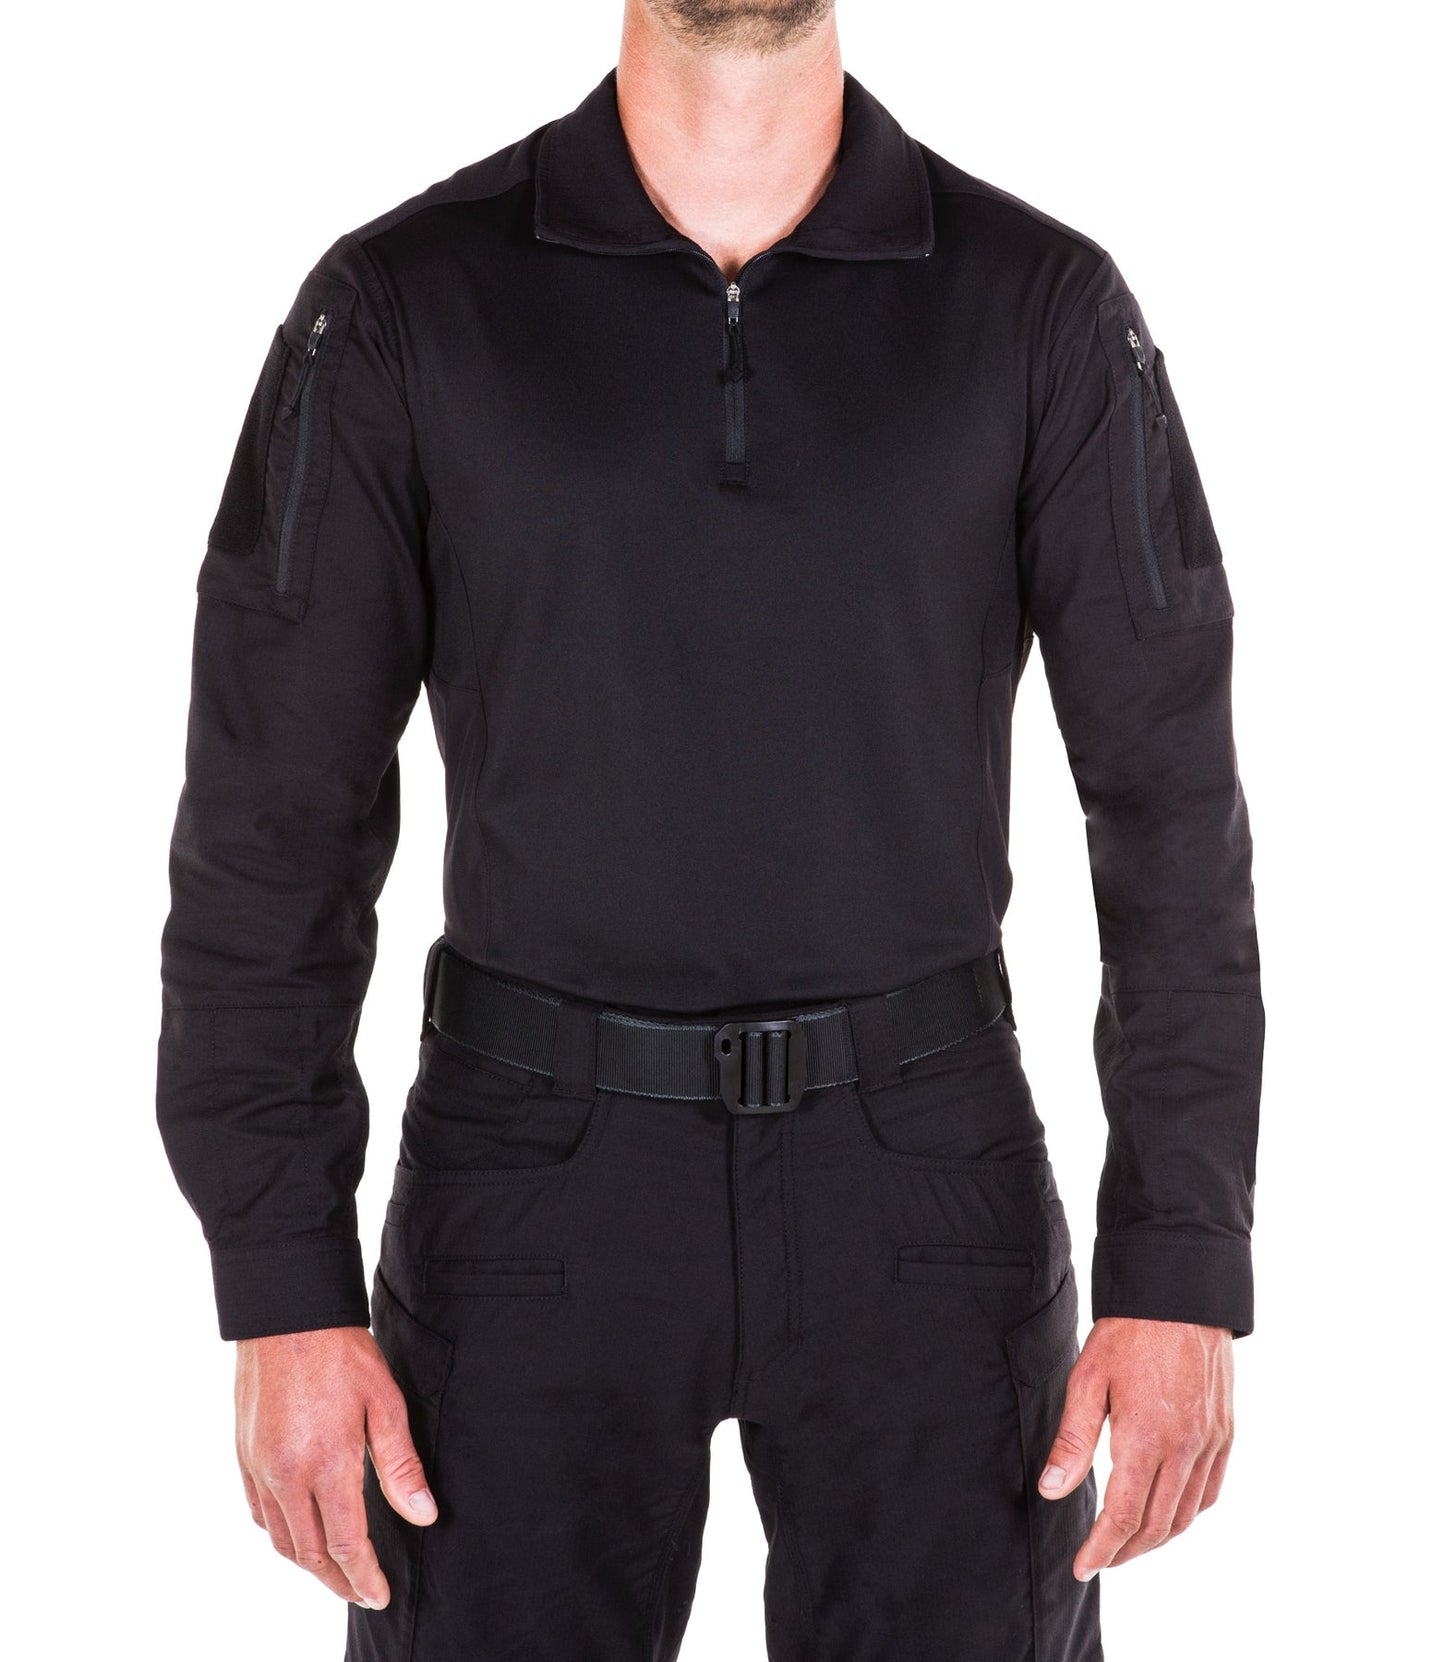 Defender Tactical Combat Shirt - Long Sleeve